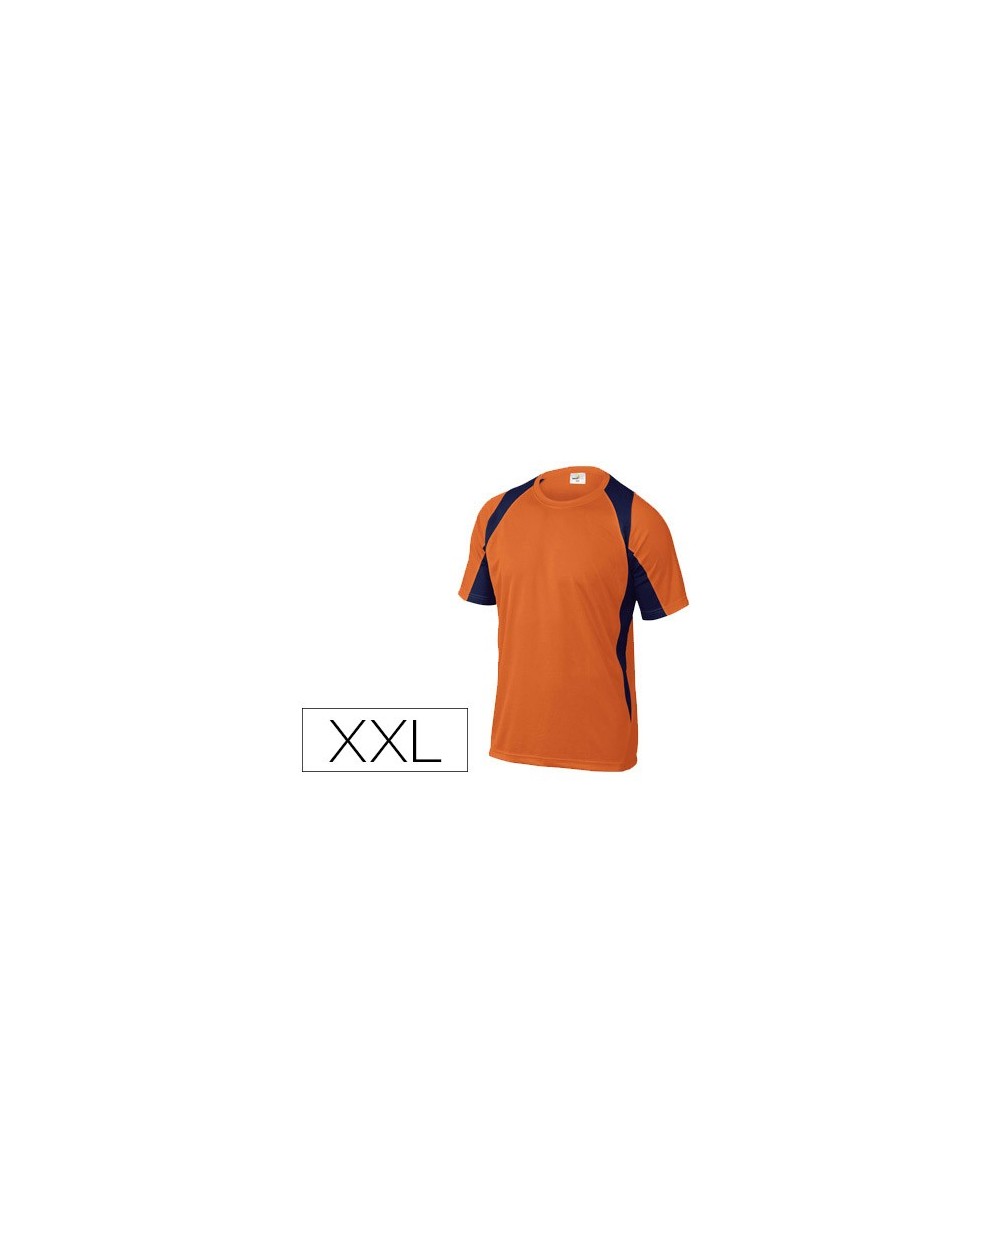 Camiseta deltaplus poliester manga corta cuello redondo tratamiento secado rapido color naranja marino talla